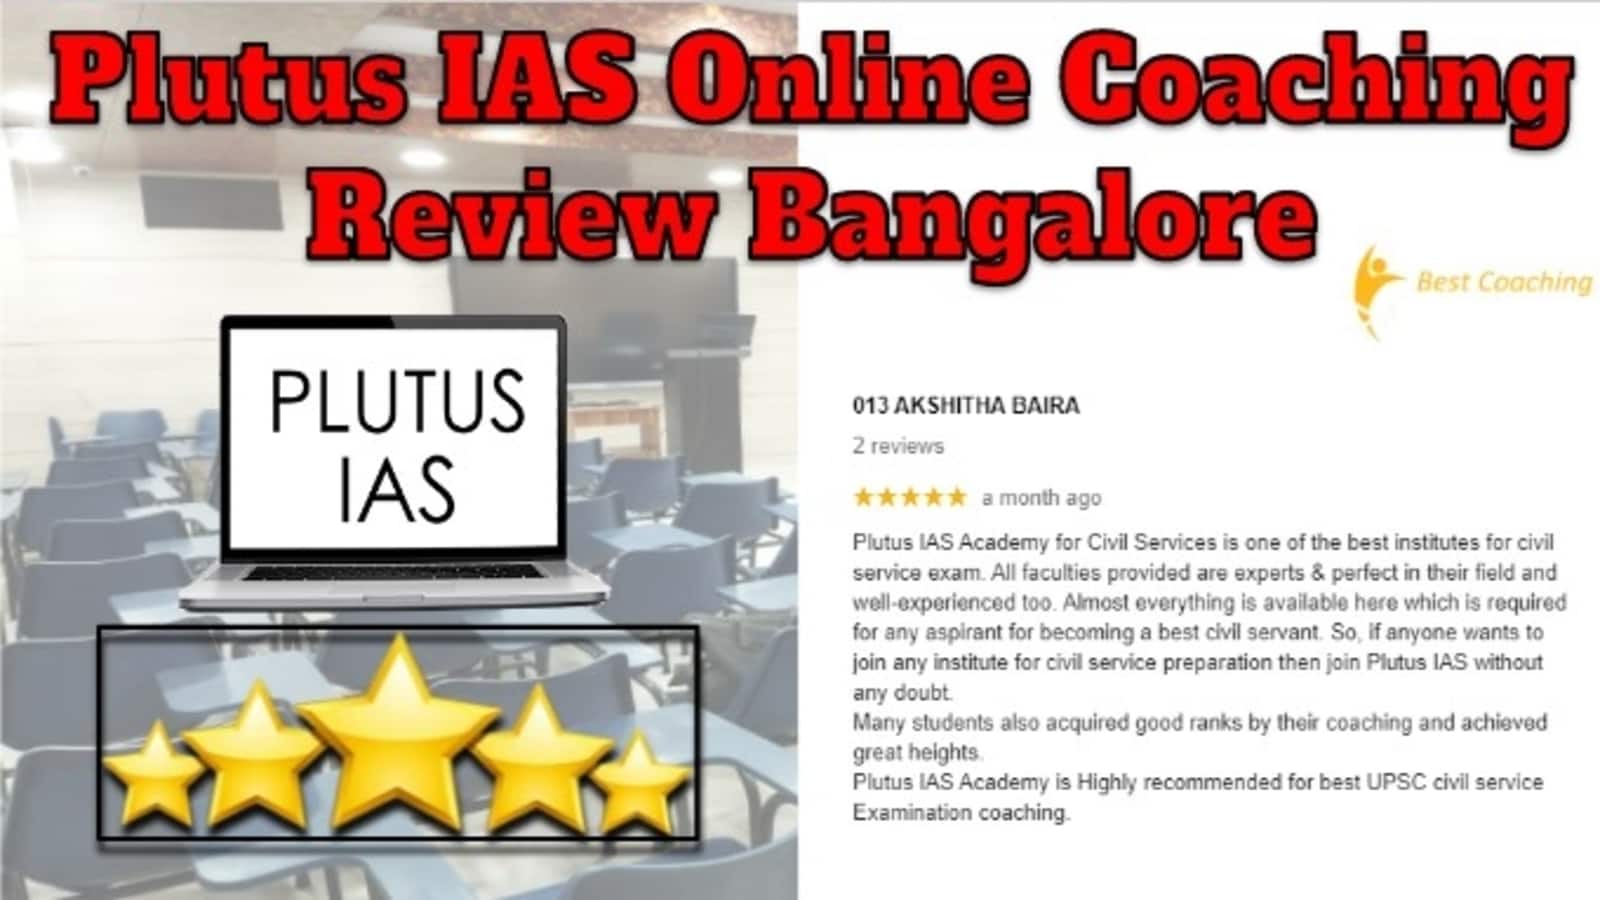 Plutus IAS Online Coaching Review Bangalore